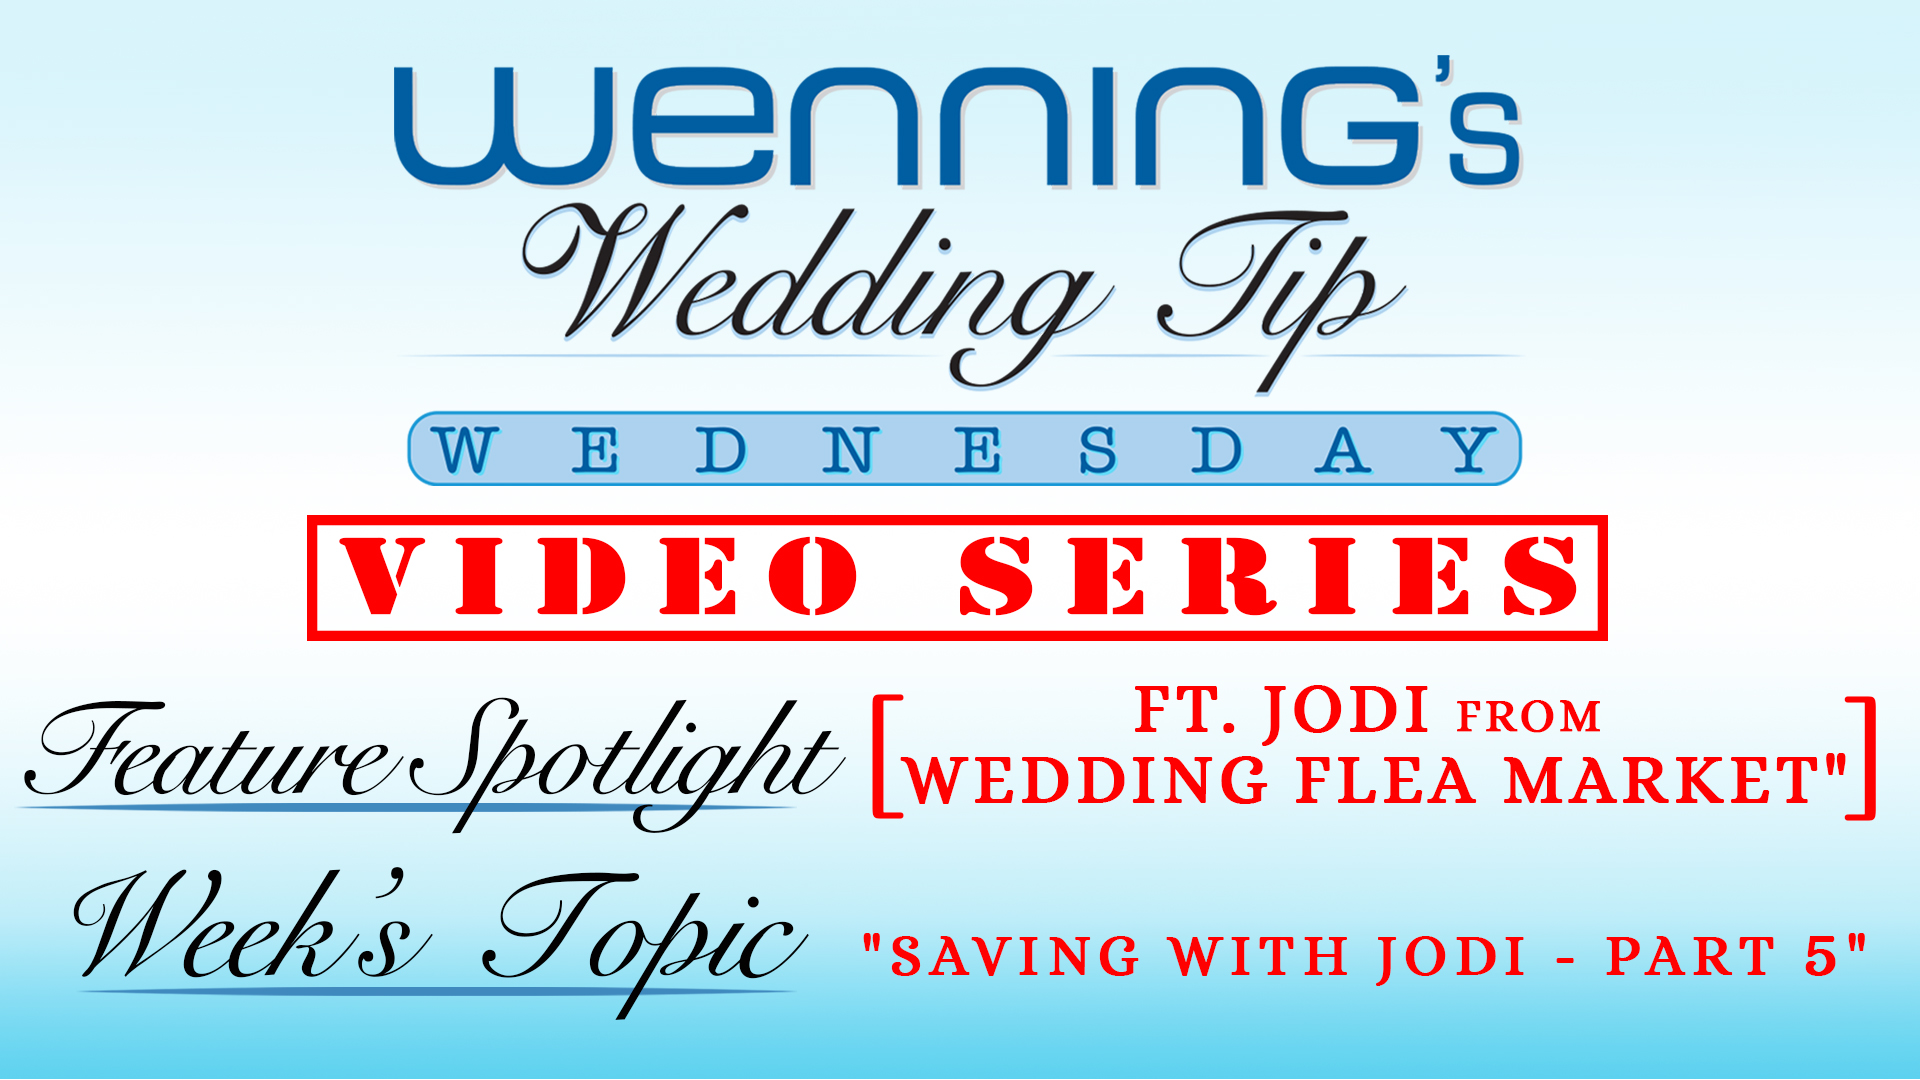 Saving with Jodi - Part 5 | Wedding Tips